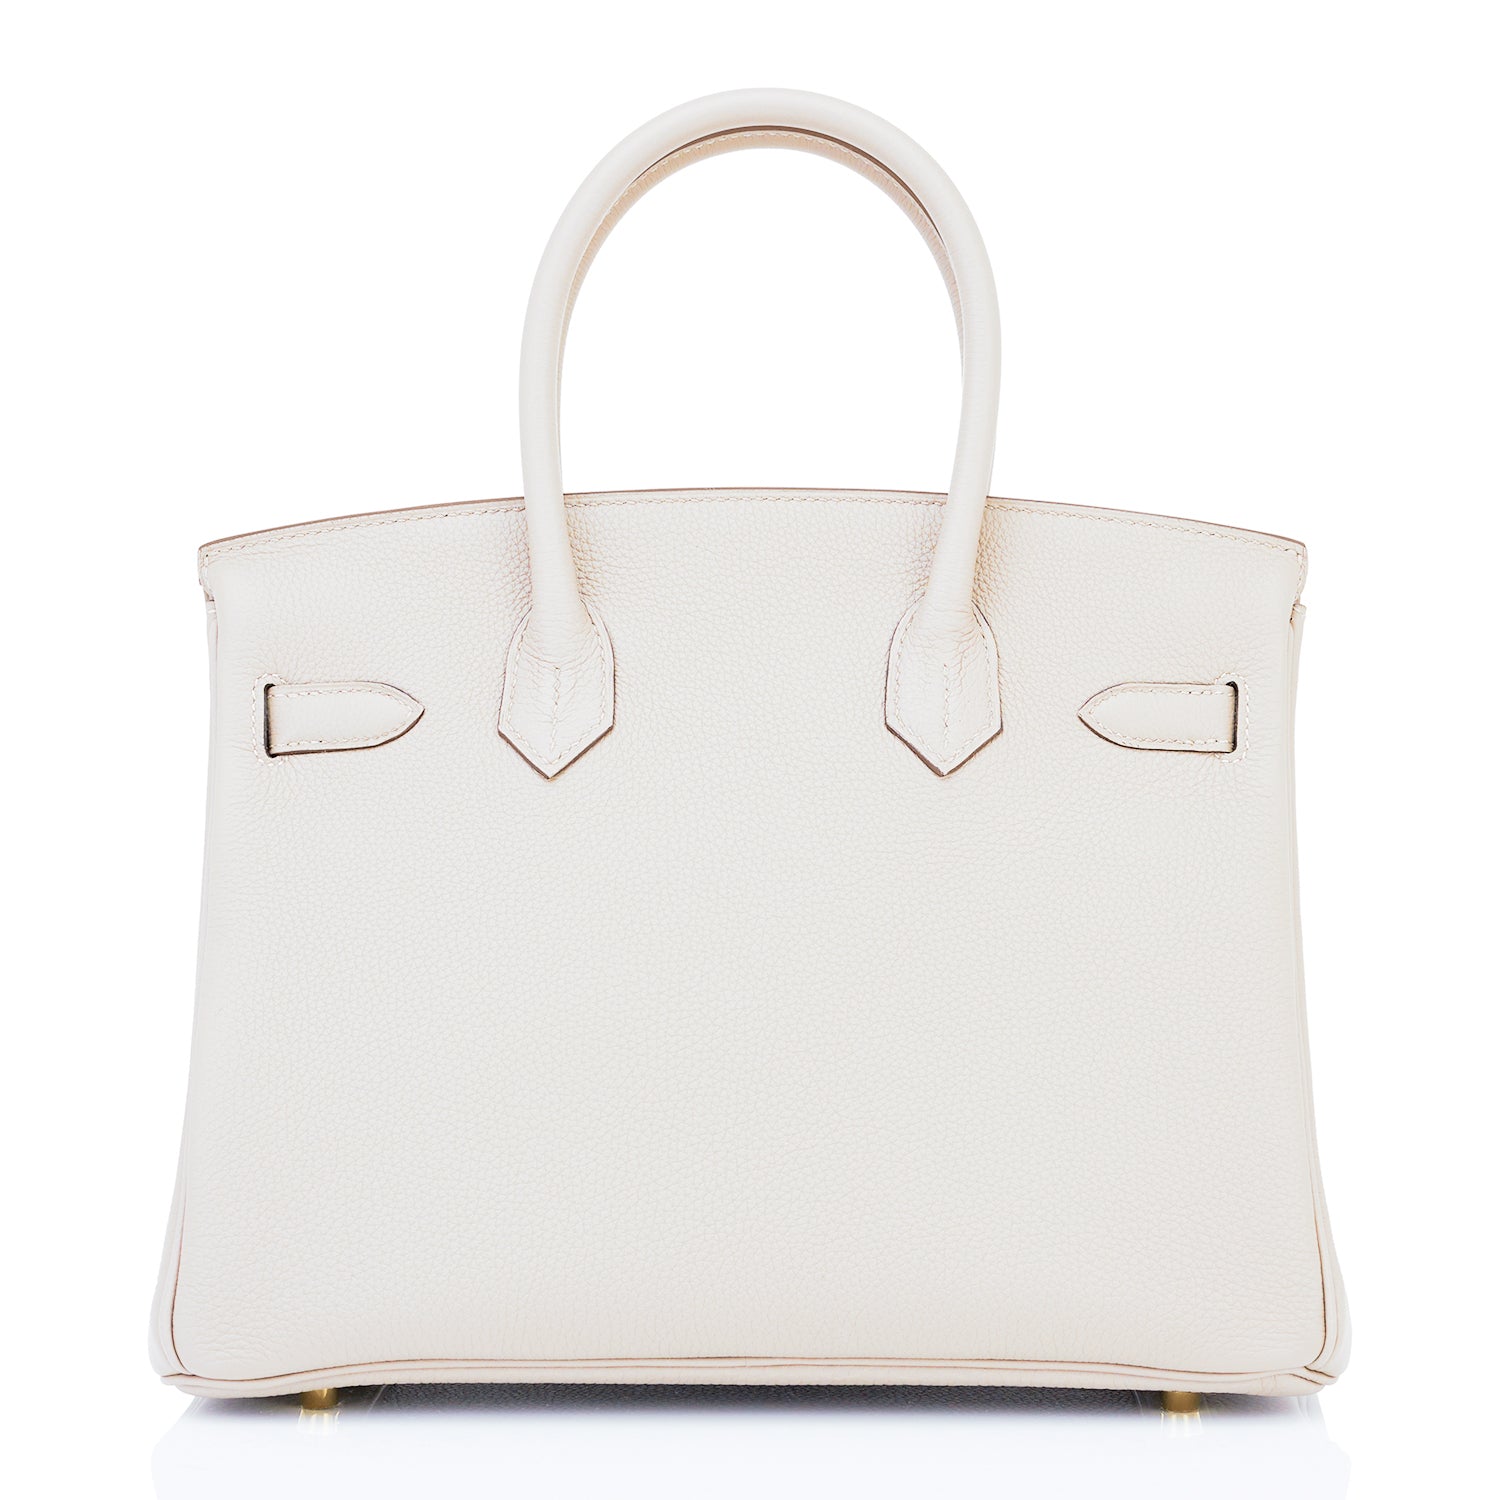 Hermès Ghillies Birkin 30 Bag Beton Limited Edition – ZAK BAGS ©️